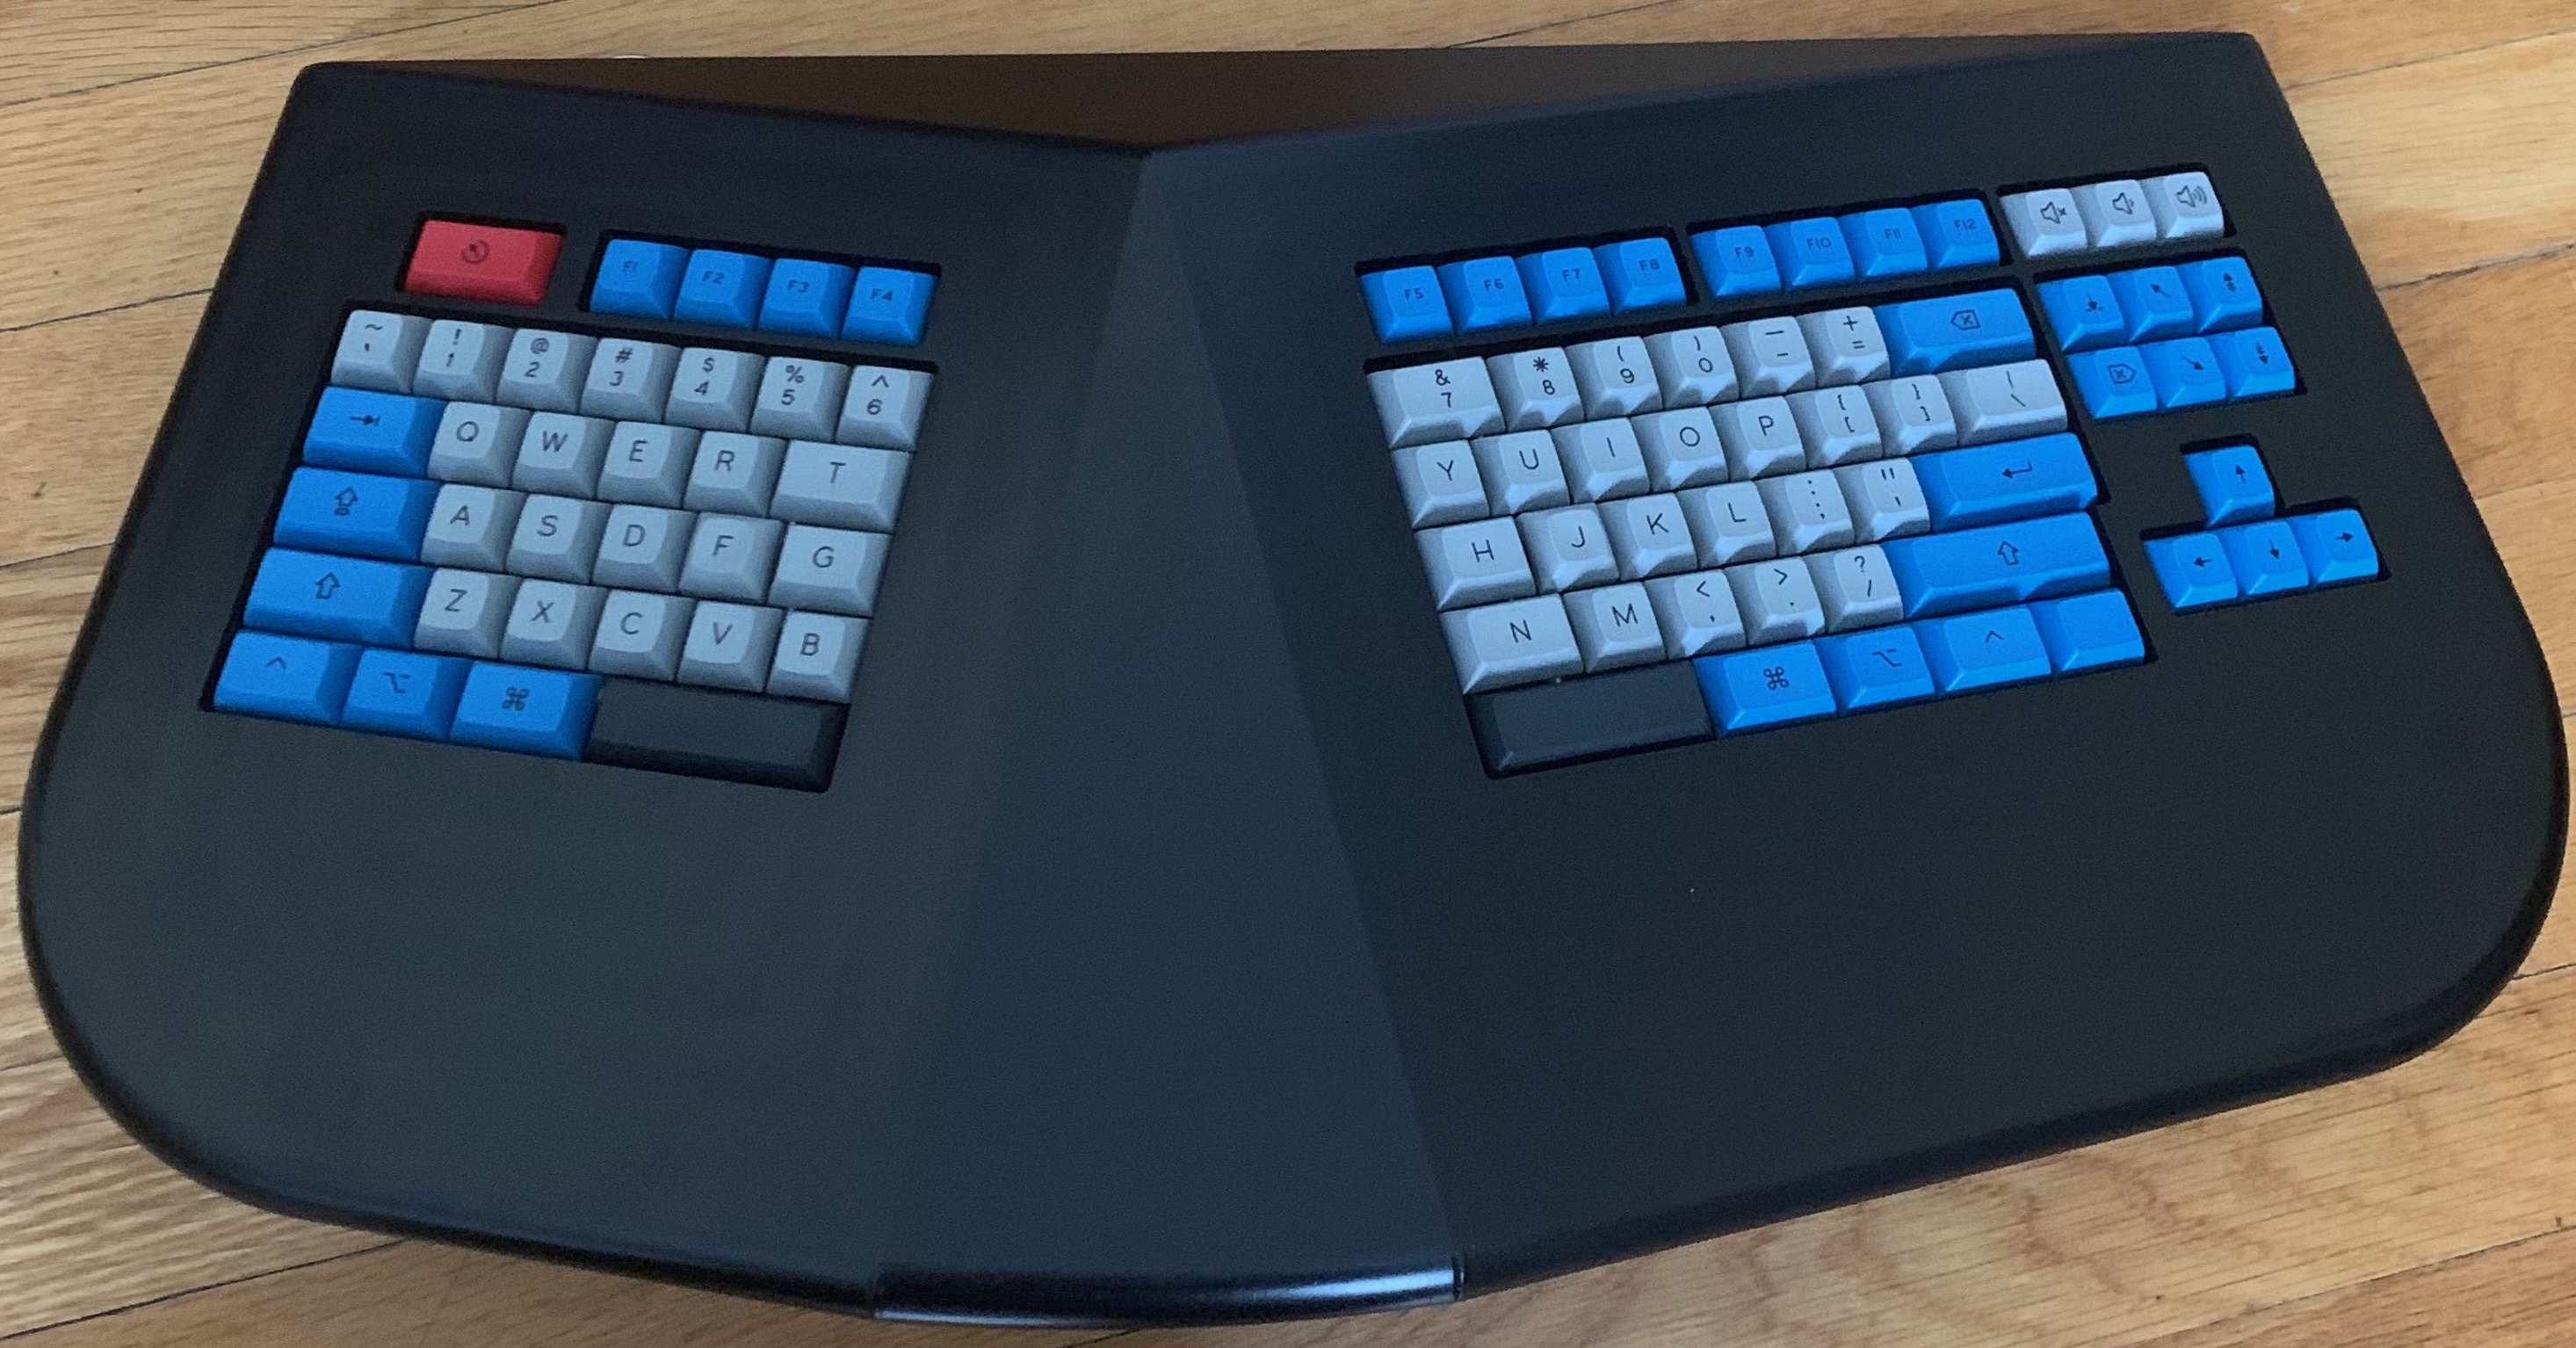 Building a better keyboard